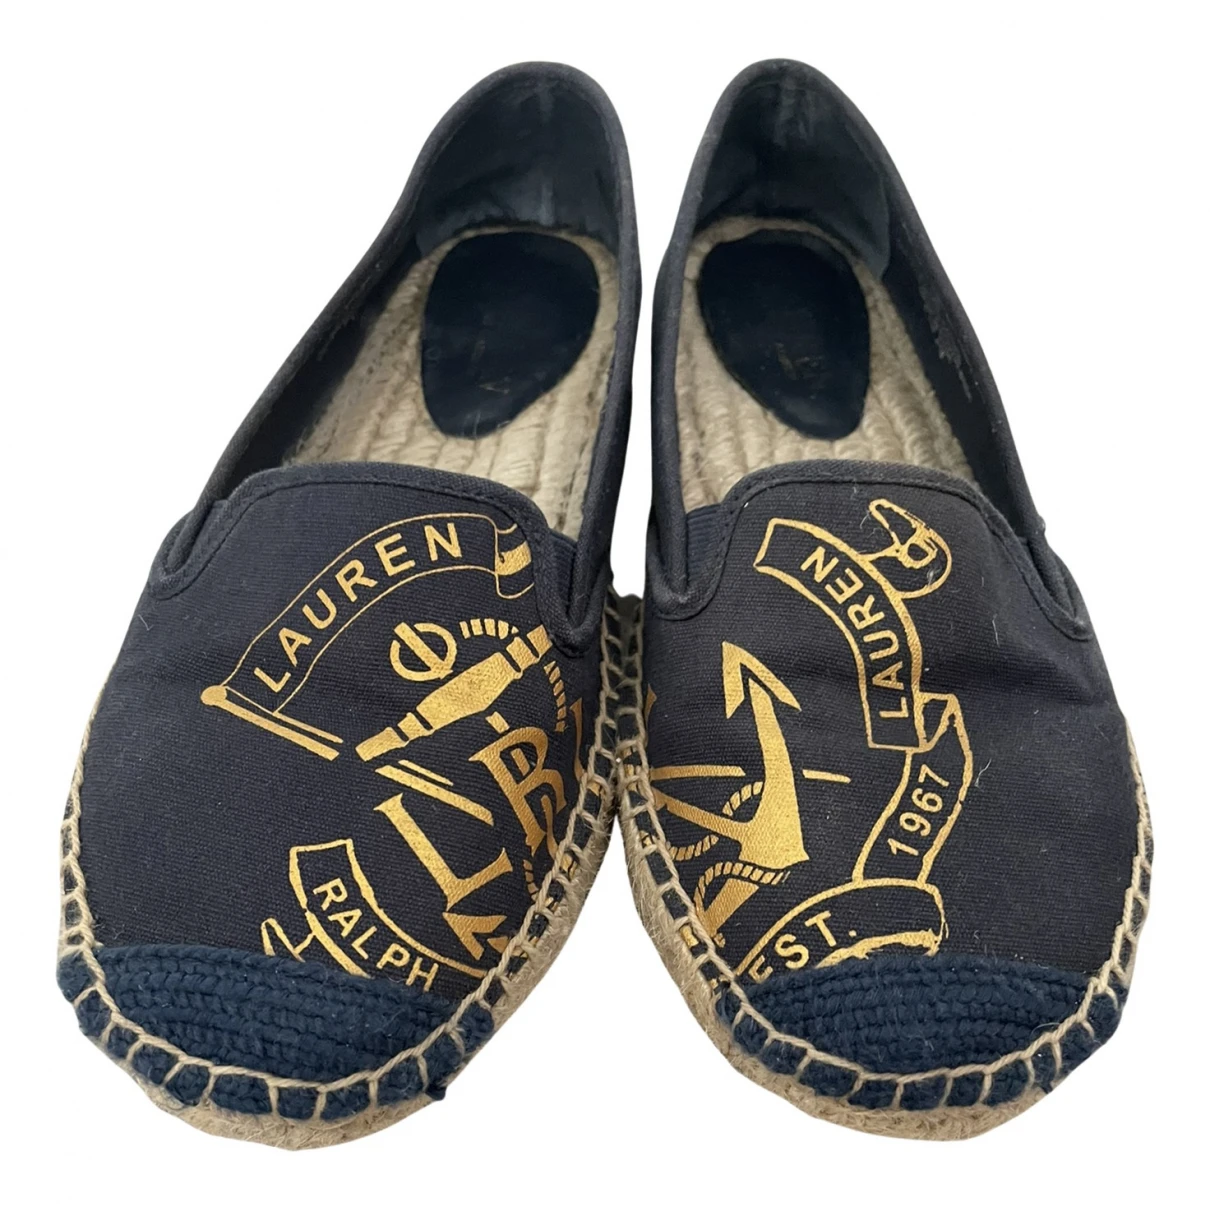 shoes Ralph Lauren espadrilles for Female Cloth 37.5 EU. Used condition